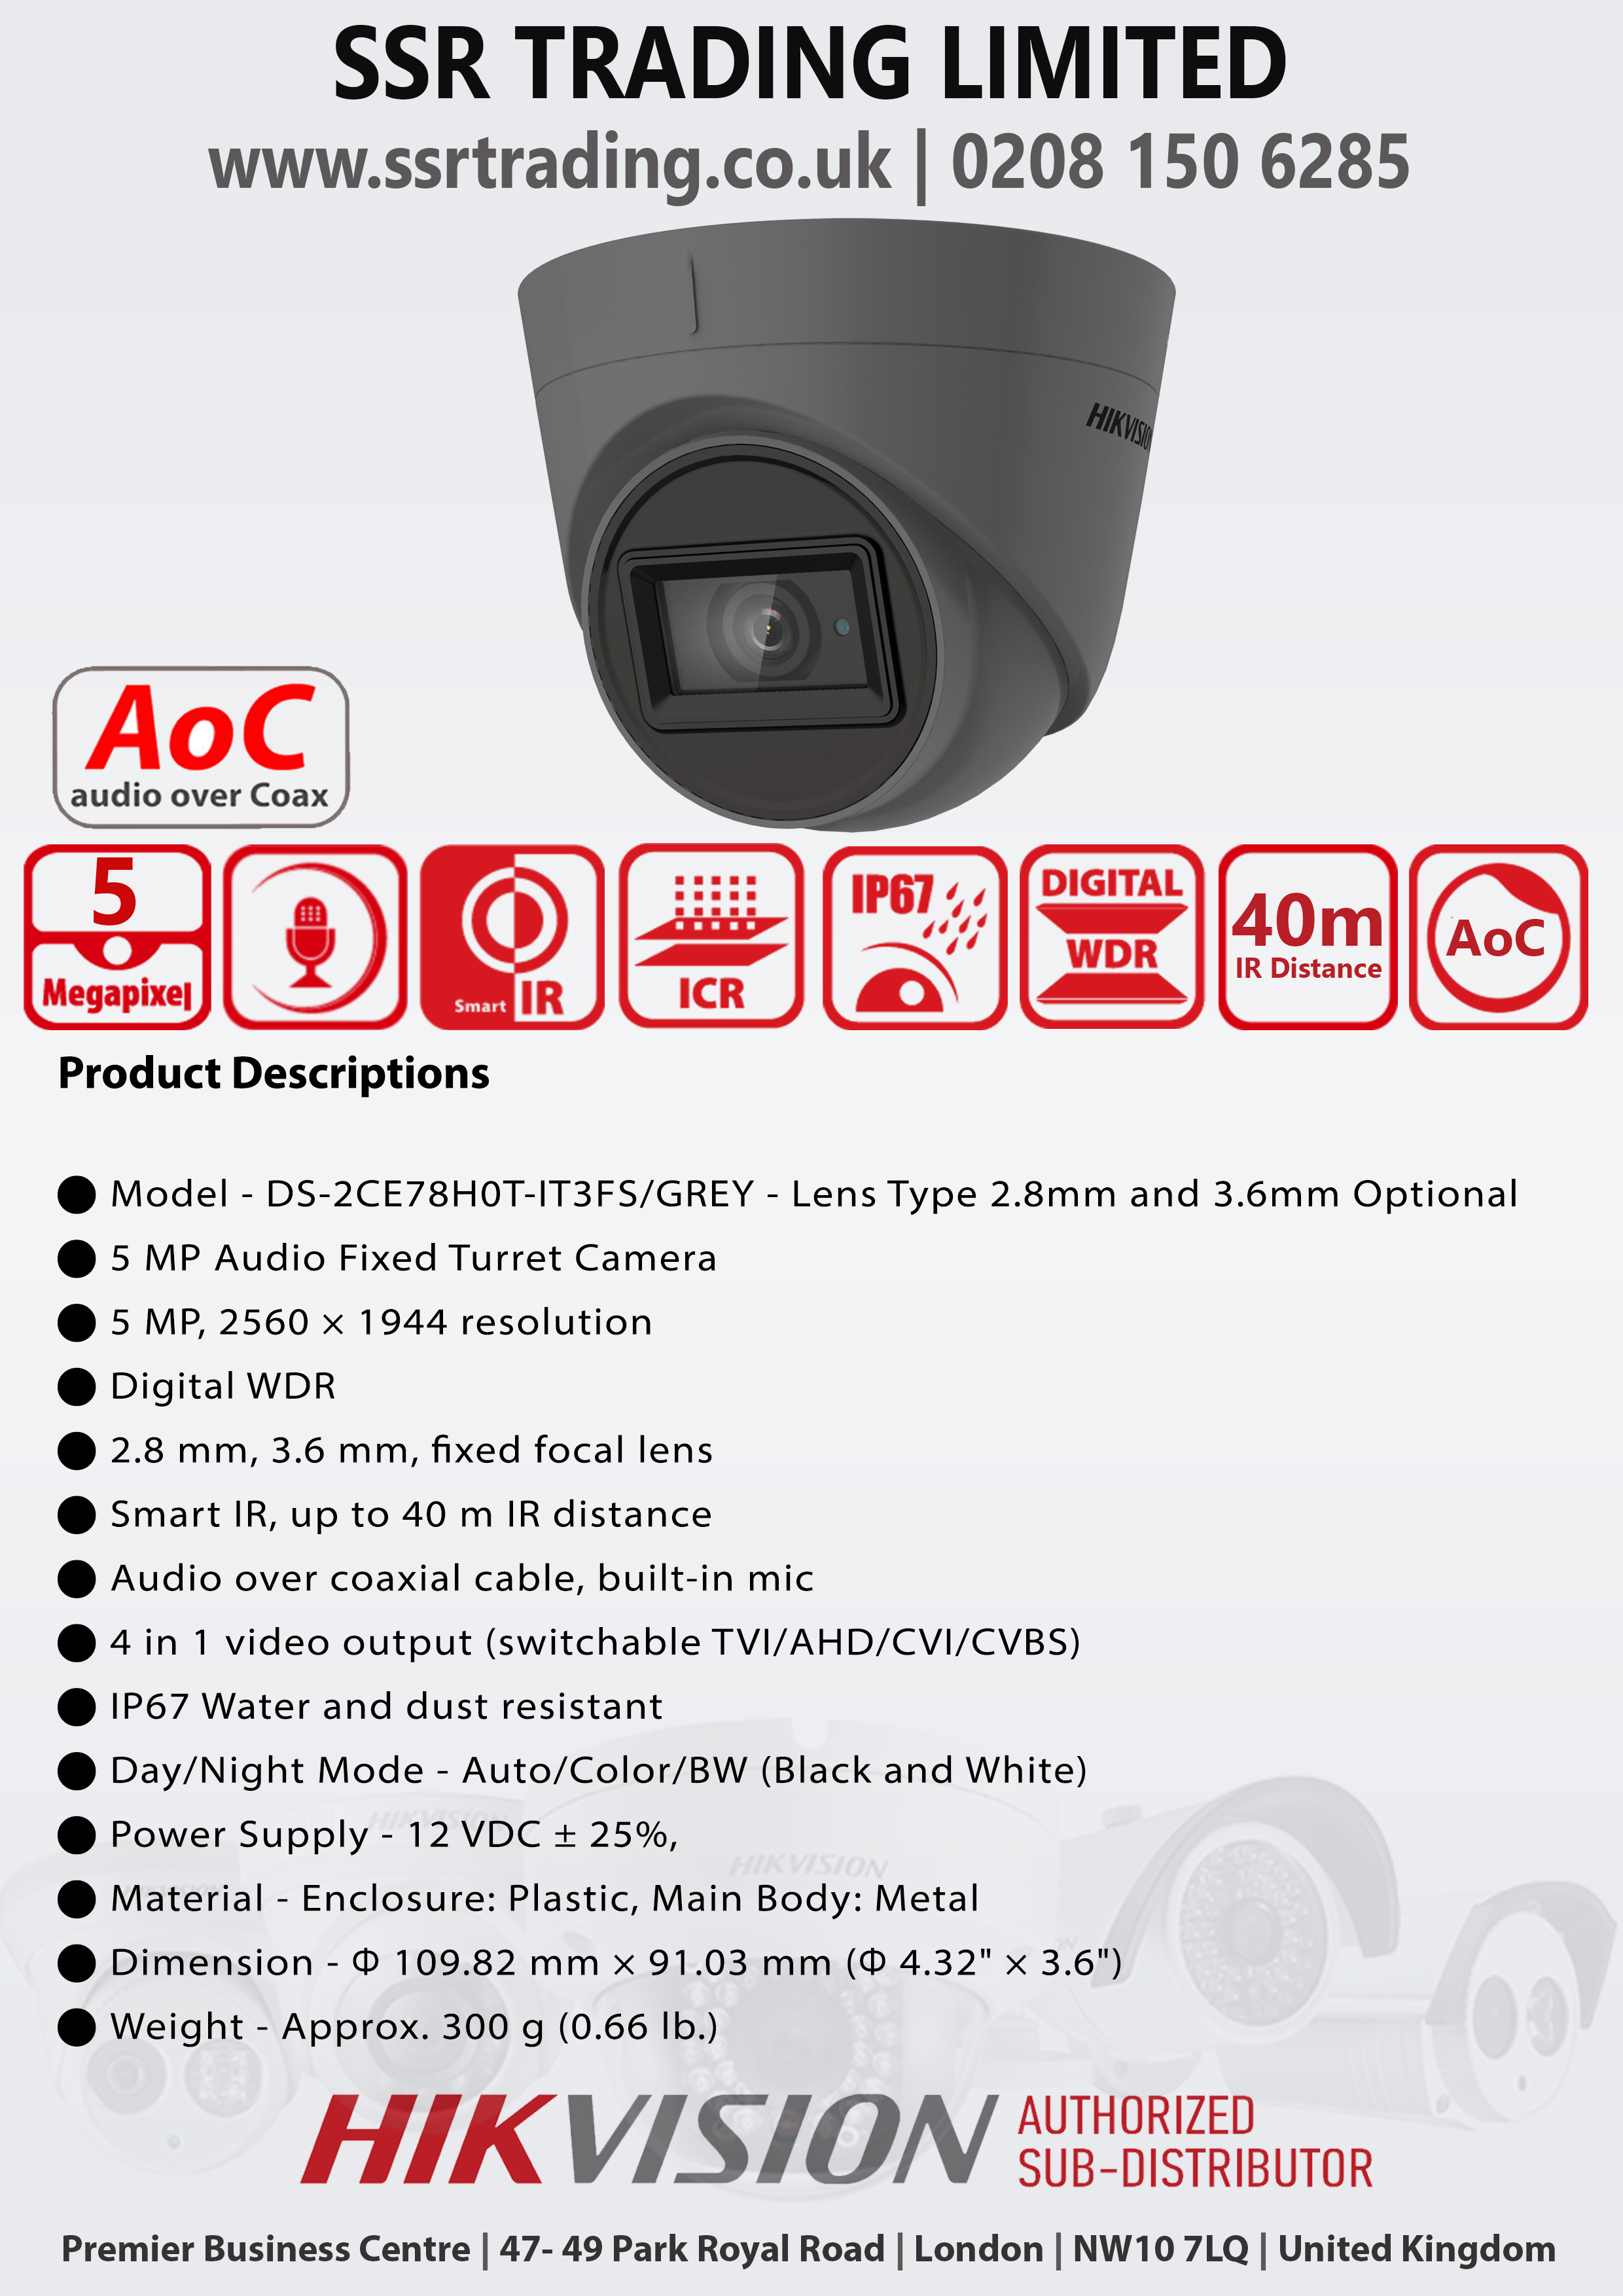 Hikvision 5MP 2.8mm Lens Built-in Mic AoC 40m IR Range EXIR Grey Turret  Camera DS-2CE78H0T-IT3FS/Grey